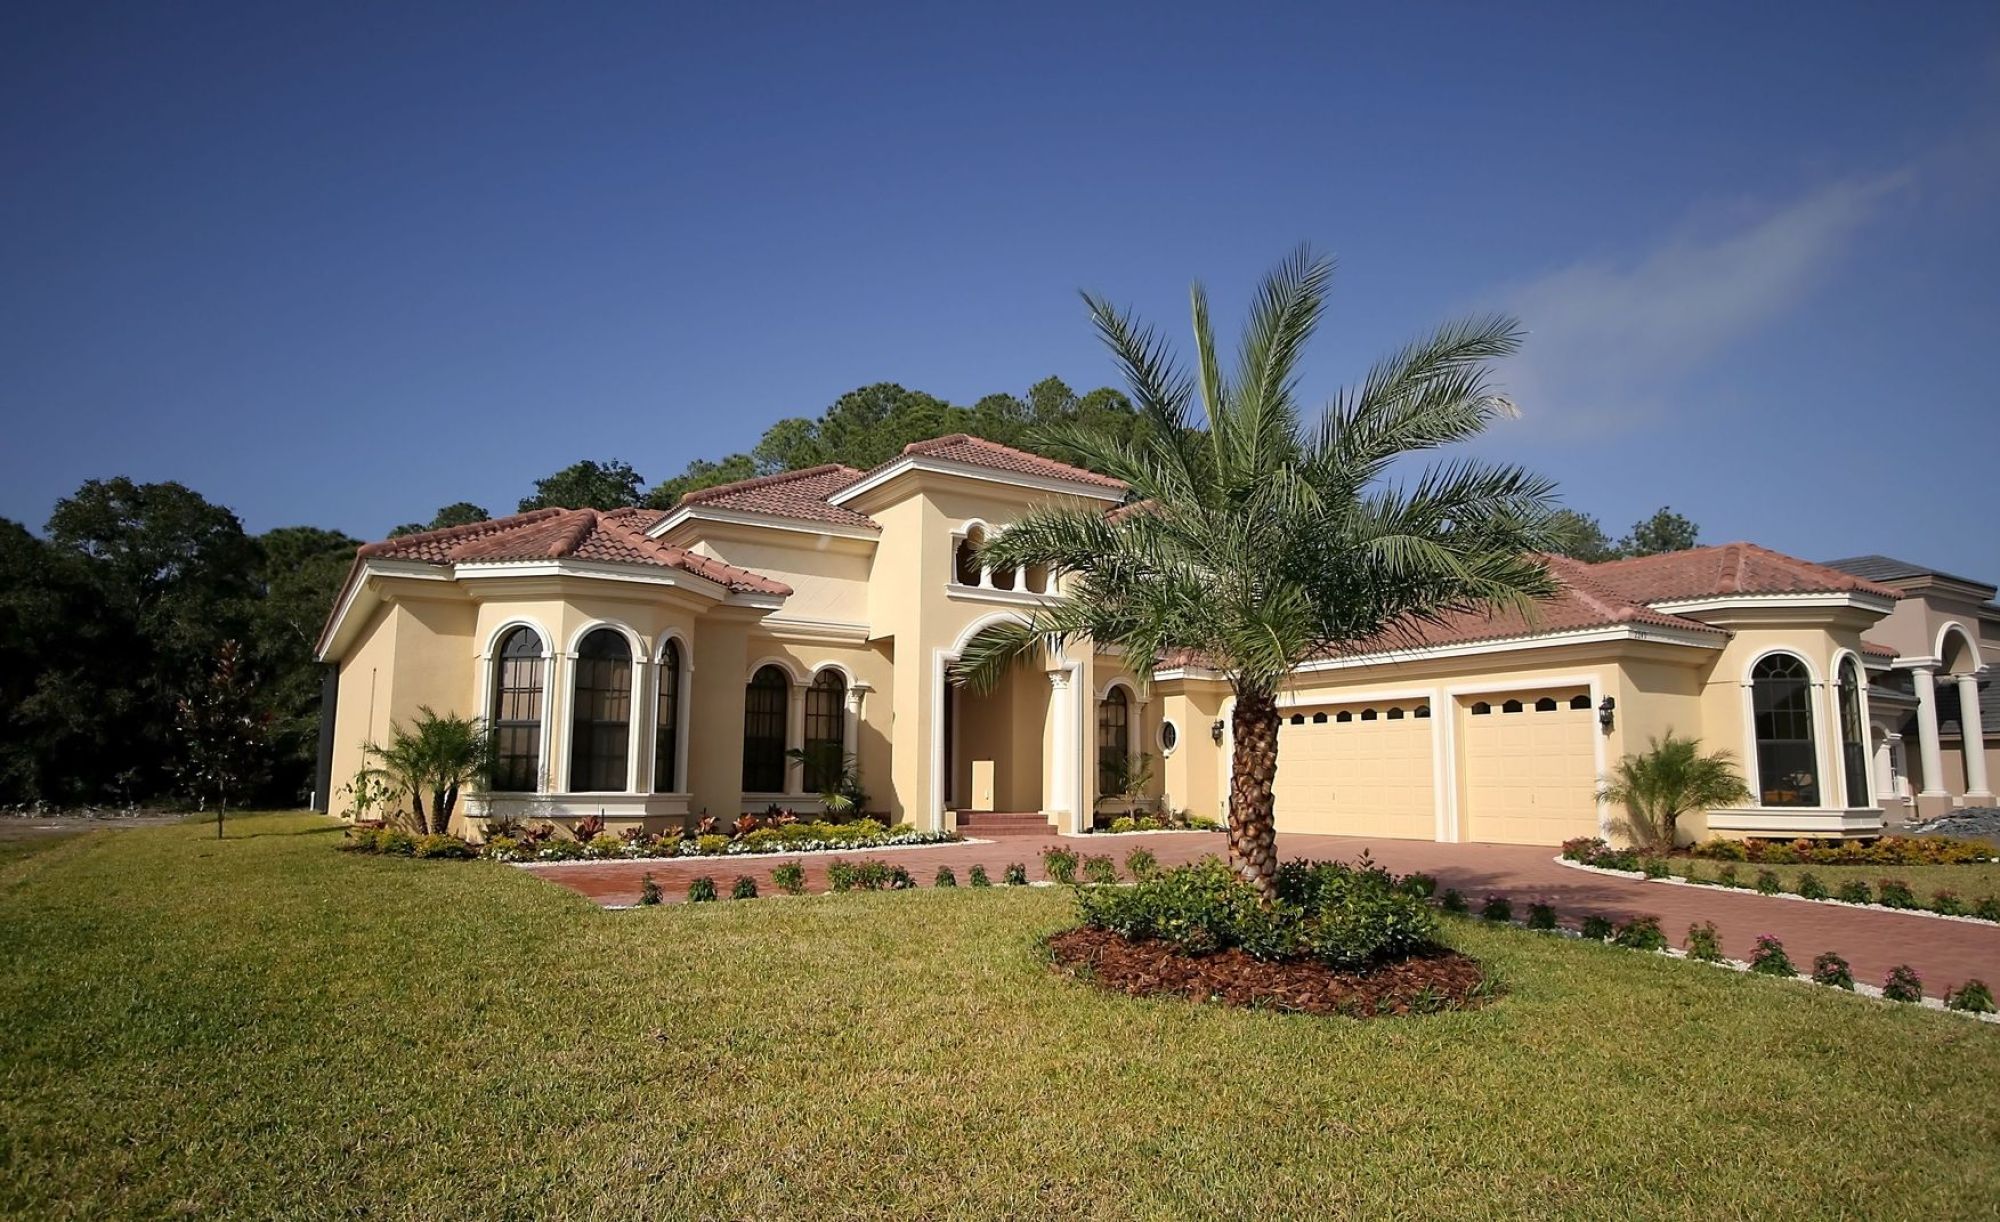 Fort Lauderdale, FL. Homeowners Insurance